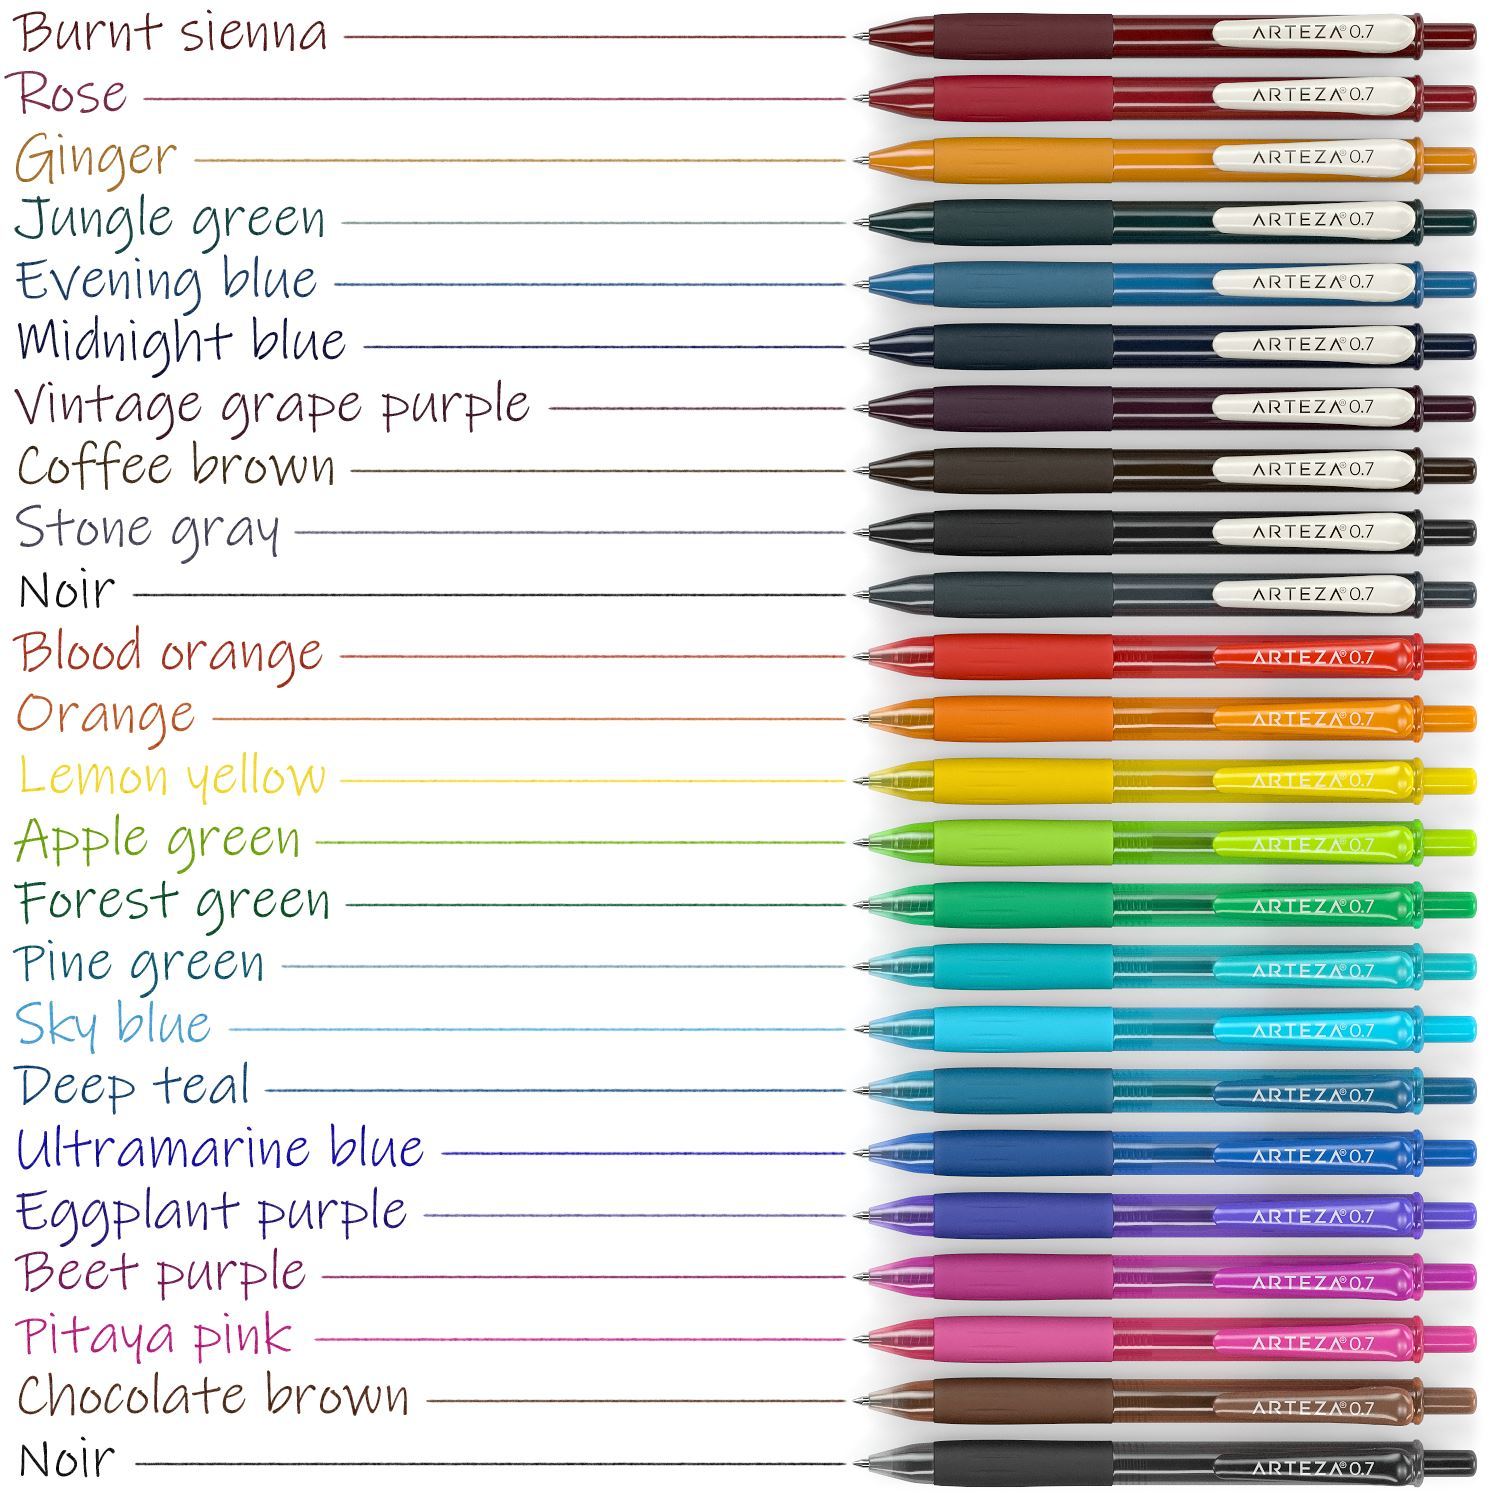 Retractable Gel Pens - Colored Pens for Adult Coloring - Cute Pen